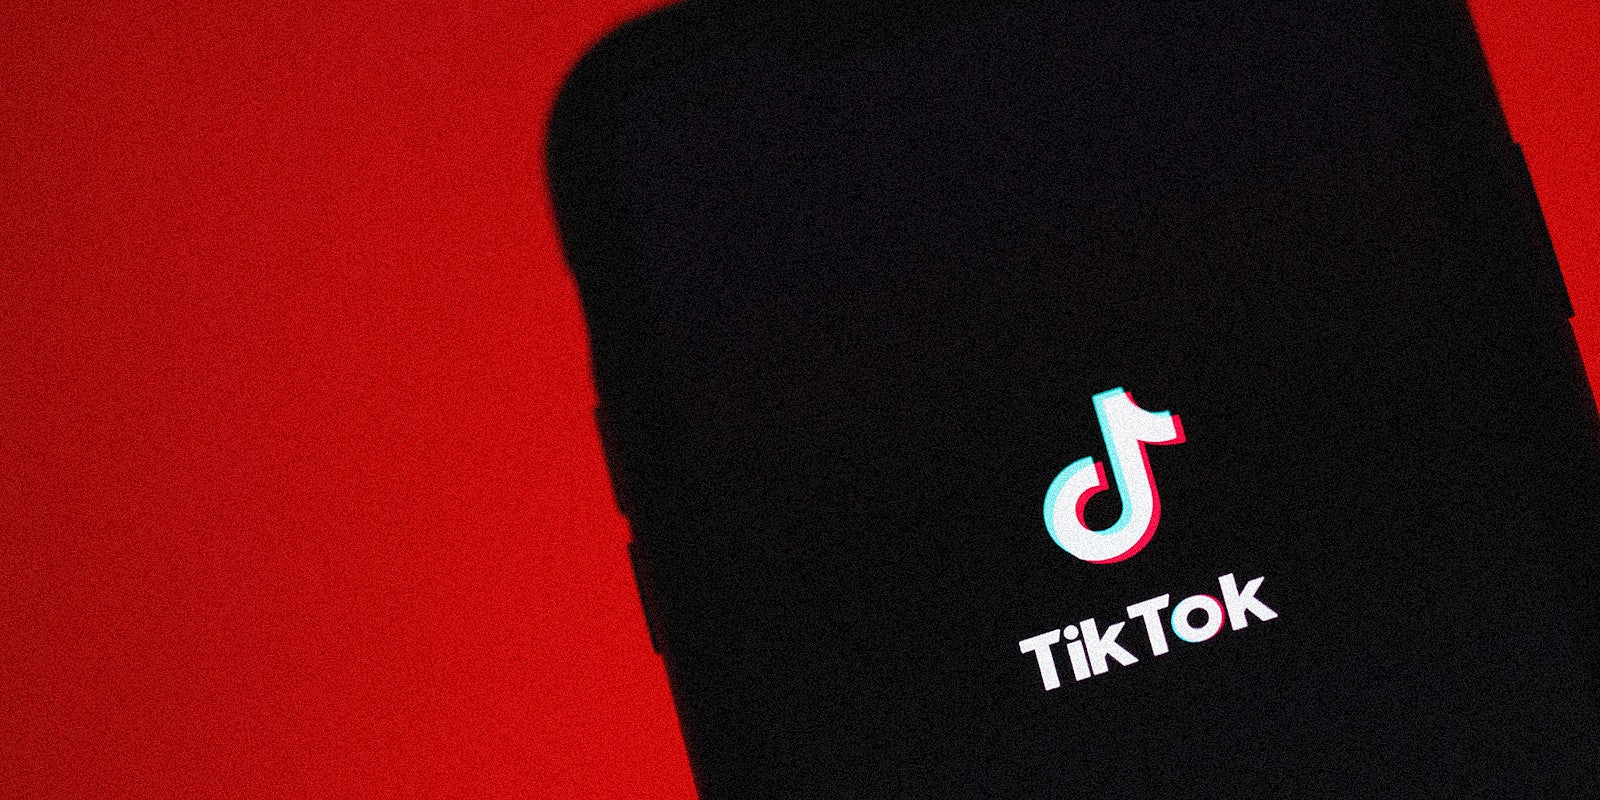 A phone with the TikTok logo.